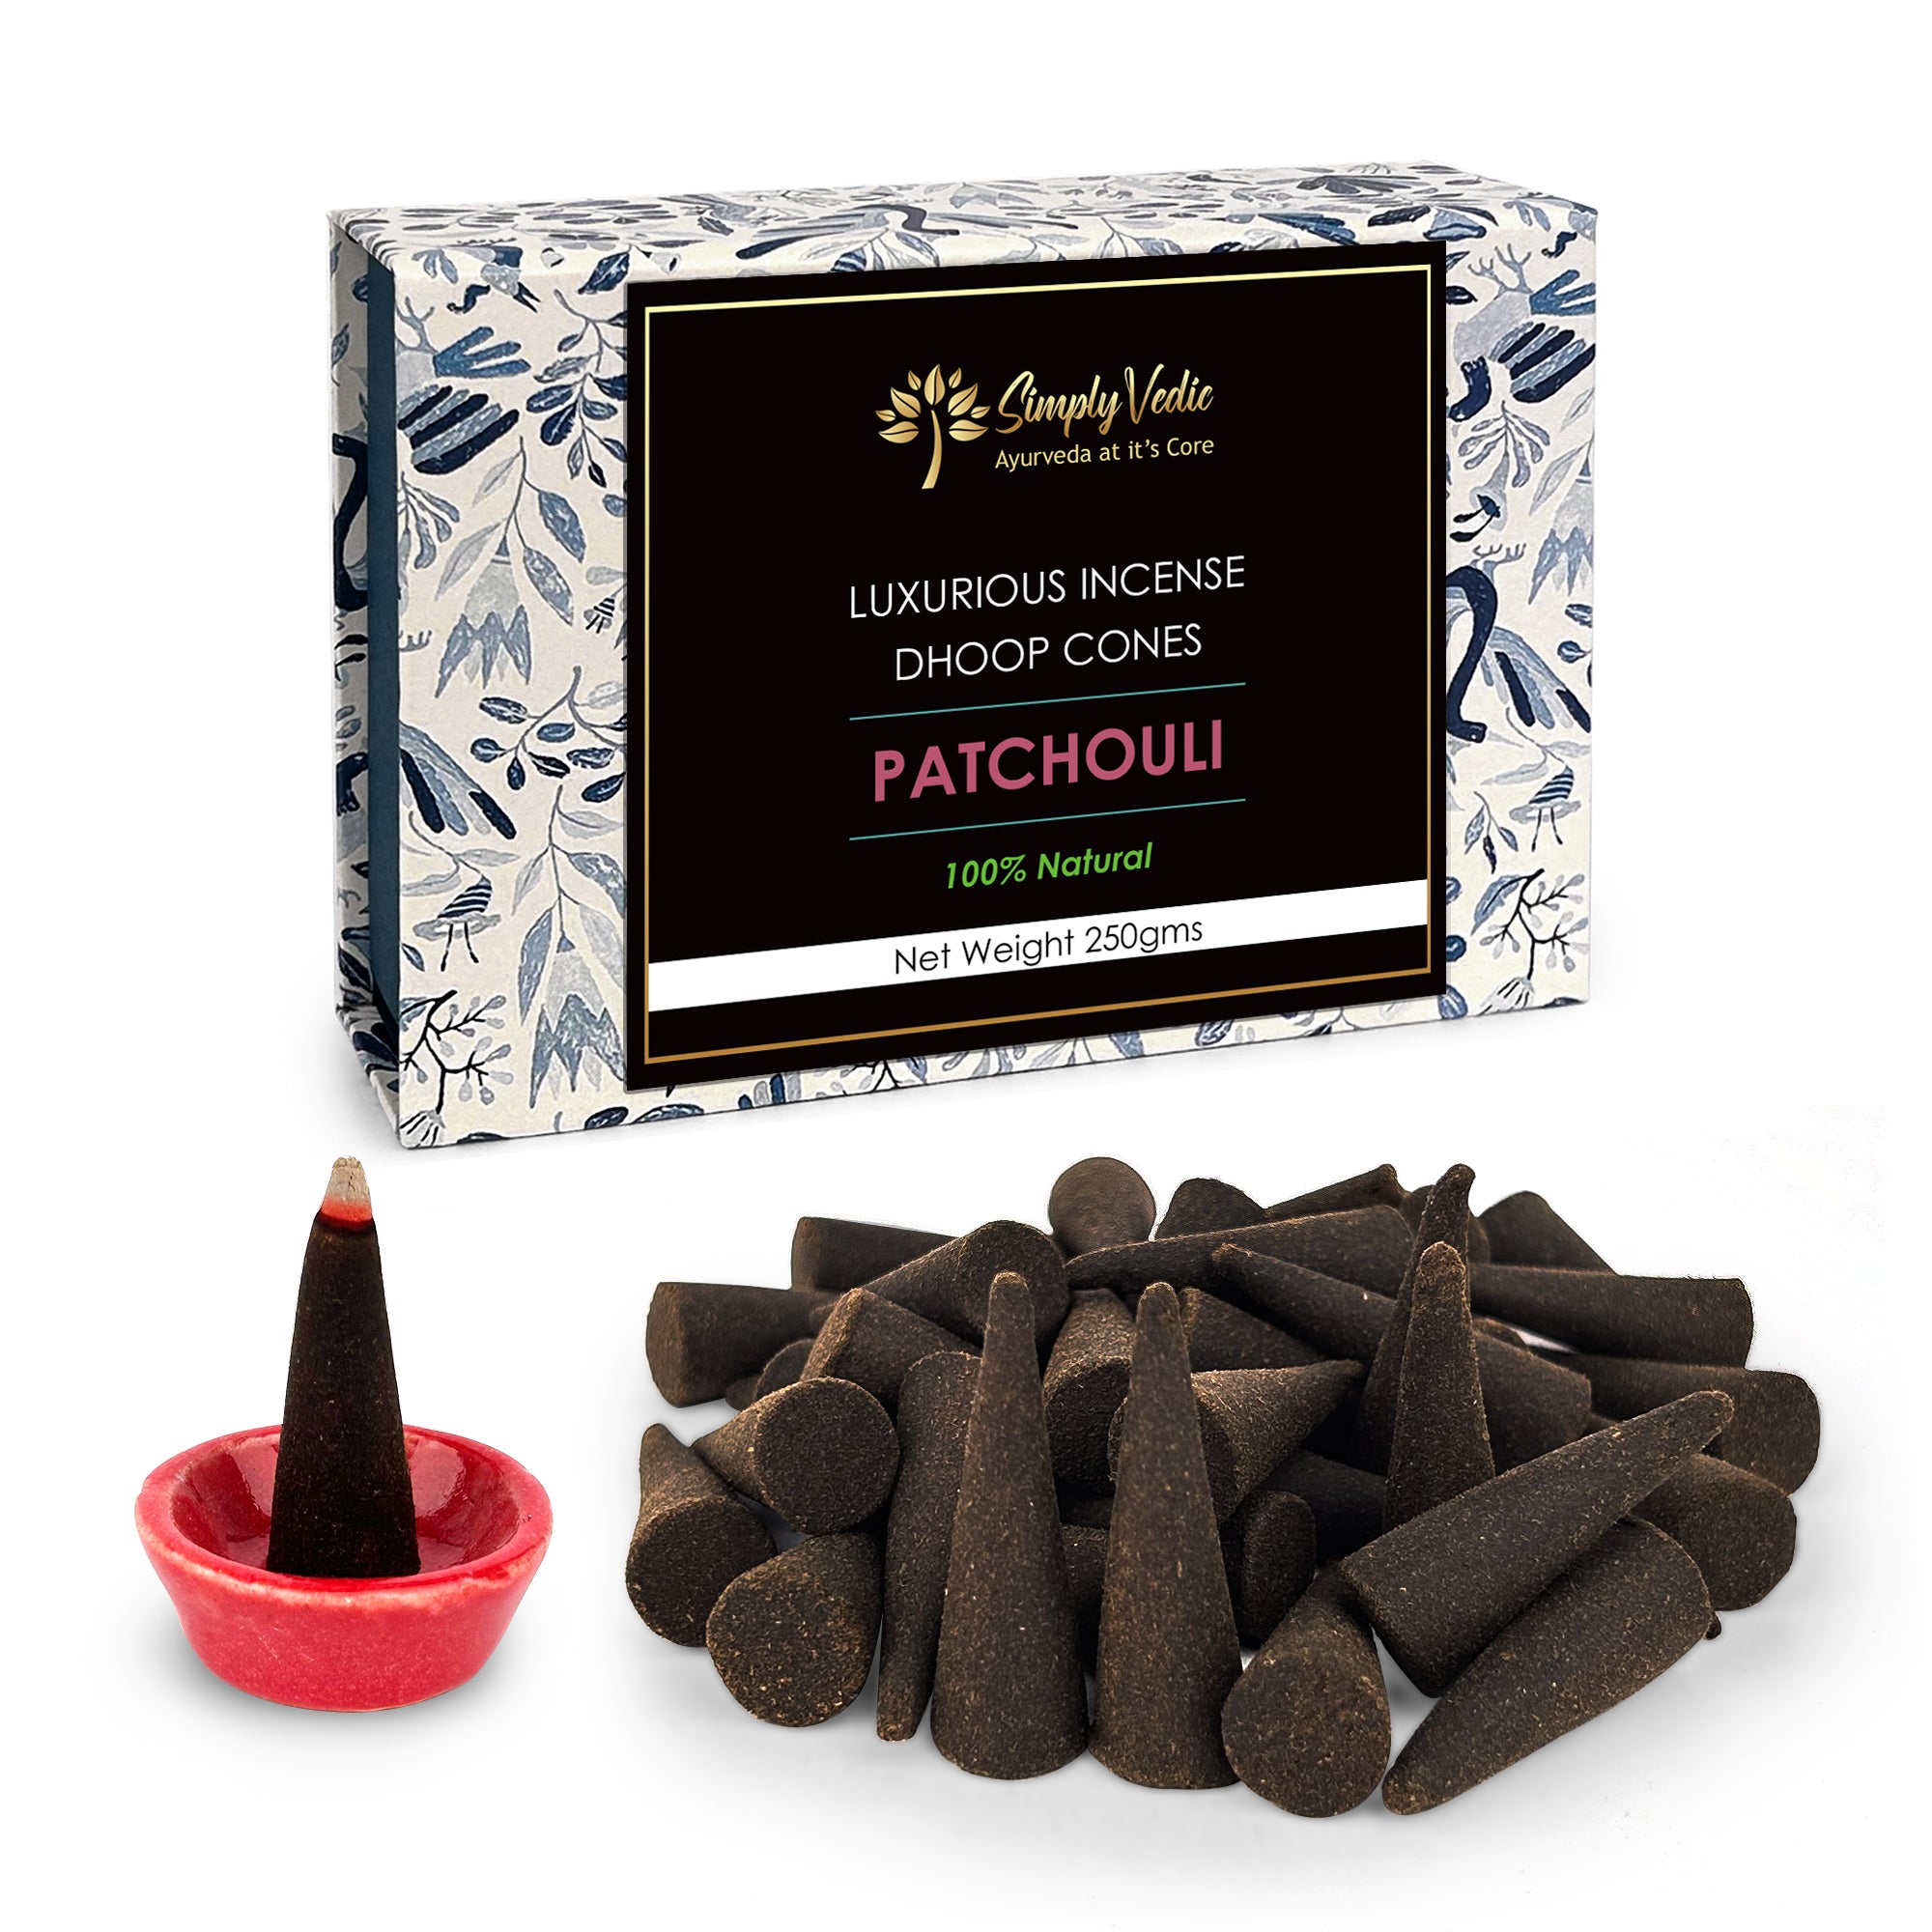 Simply Vedic's Patchouli Incense Cones